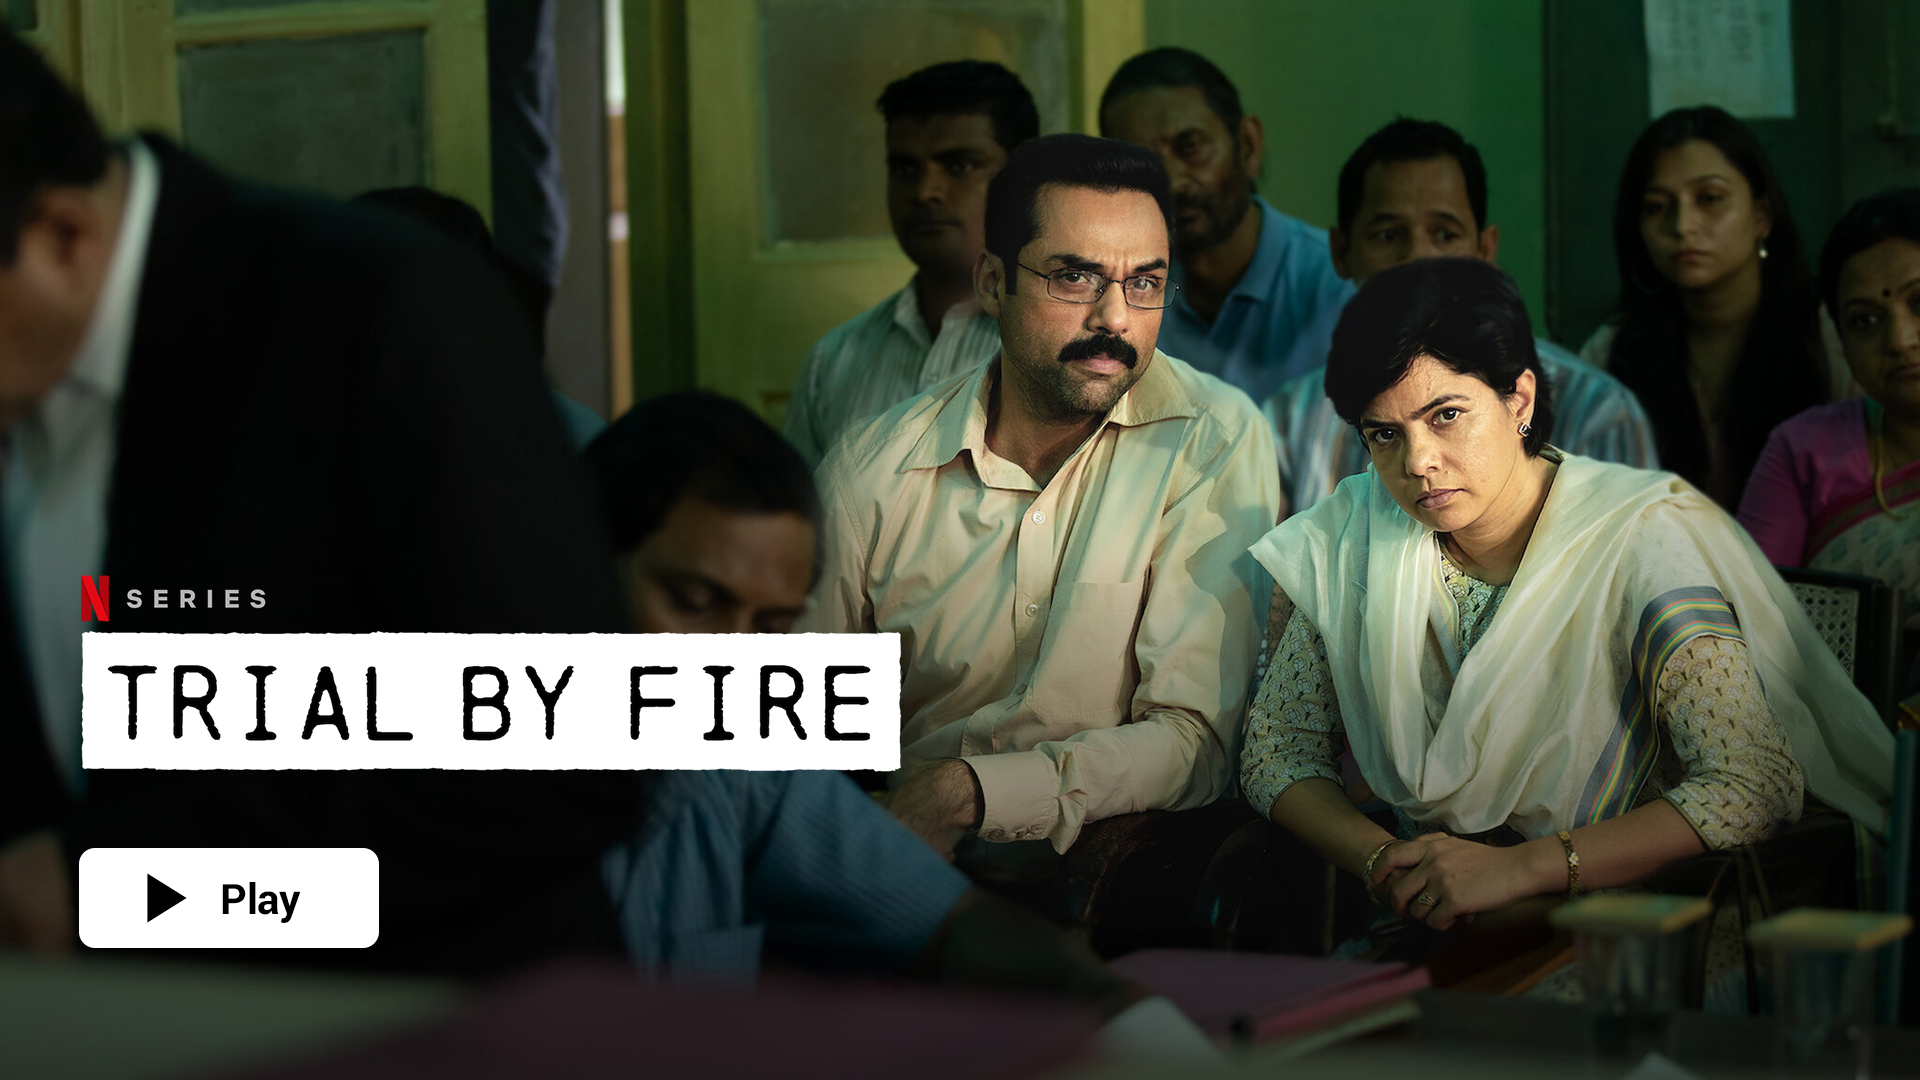 Watch Trial by Fire on Netflix